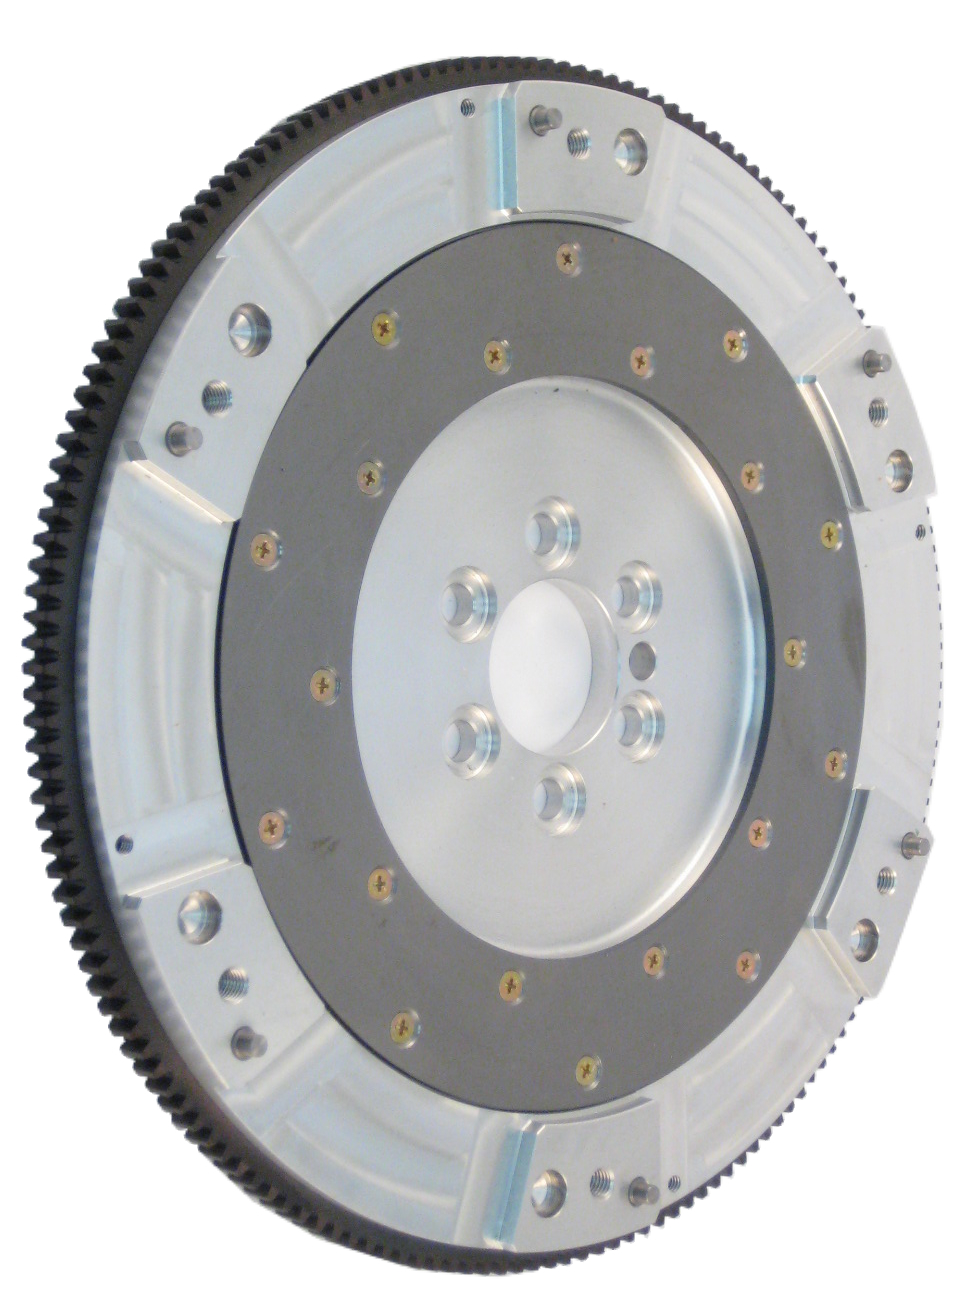 KAT-6525 Insert For LS9X/LS9R Flywheel Bolt in clutch surface for 5198 flywheel